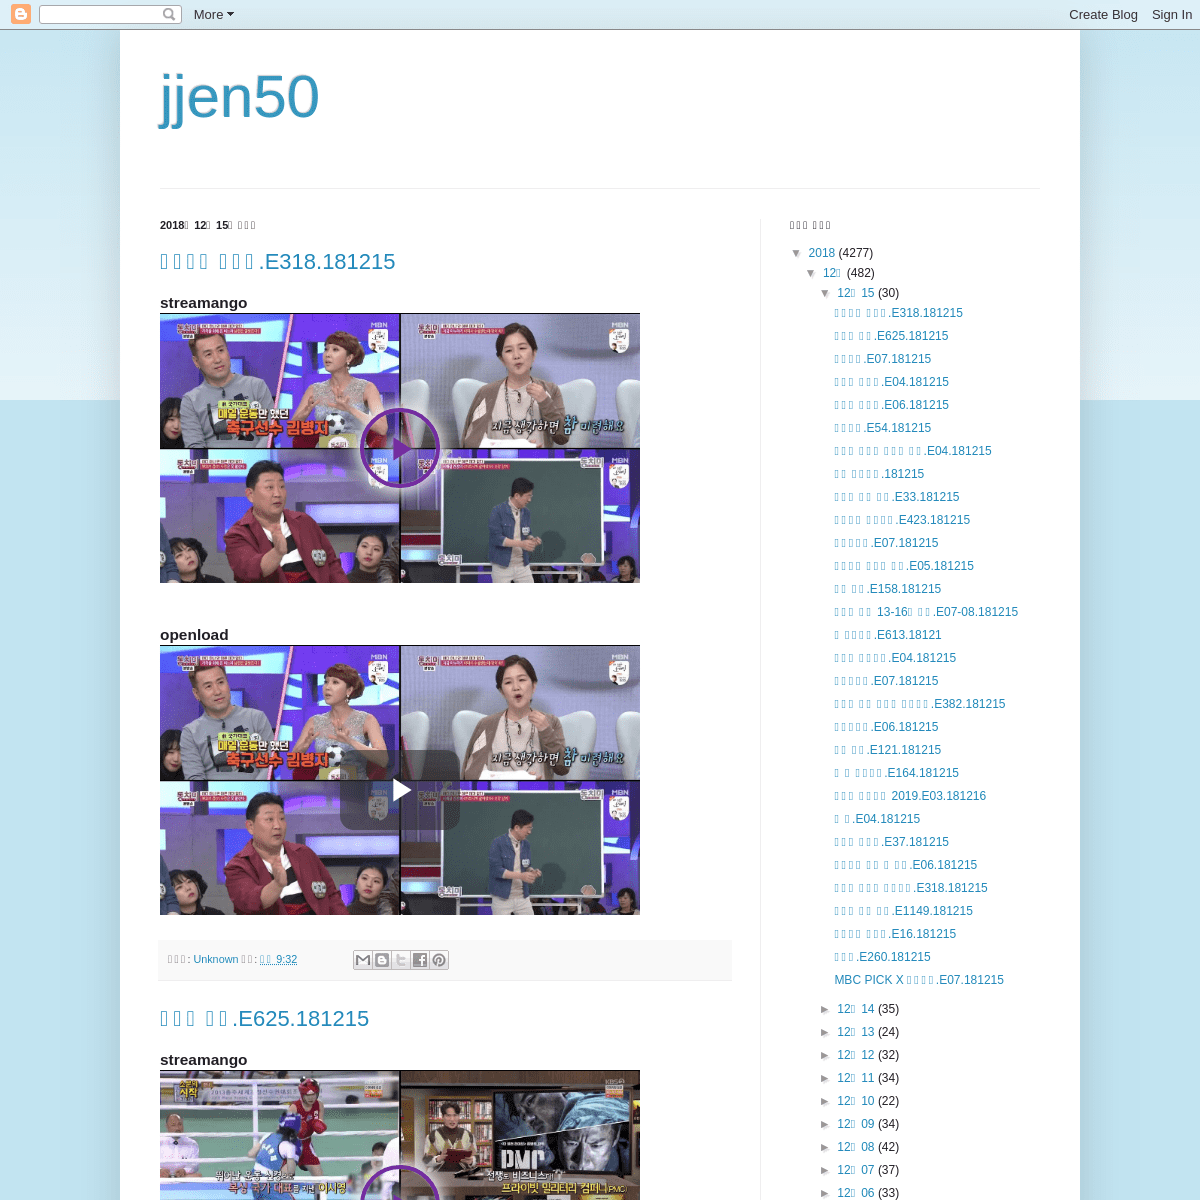 A complete backup of jjen50.blogspot.com